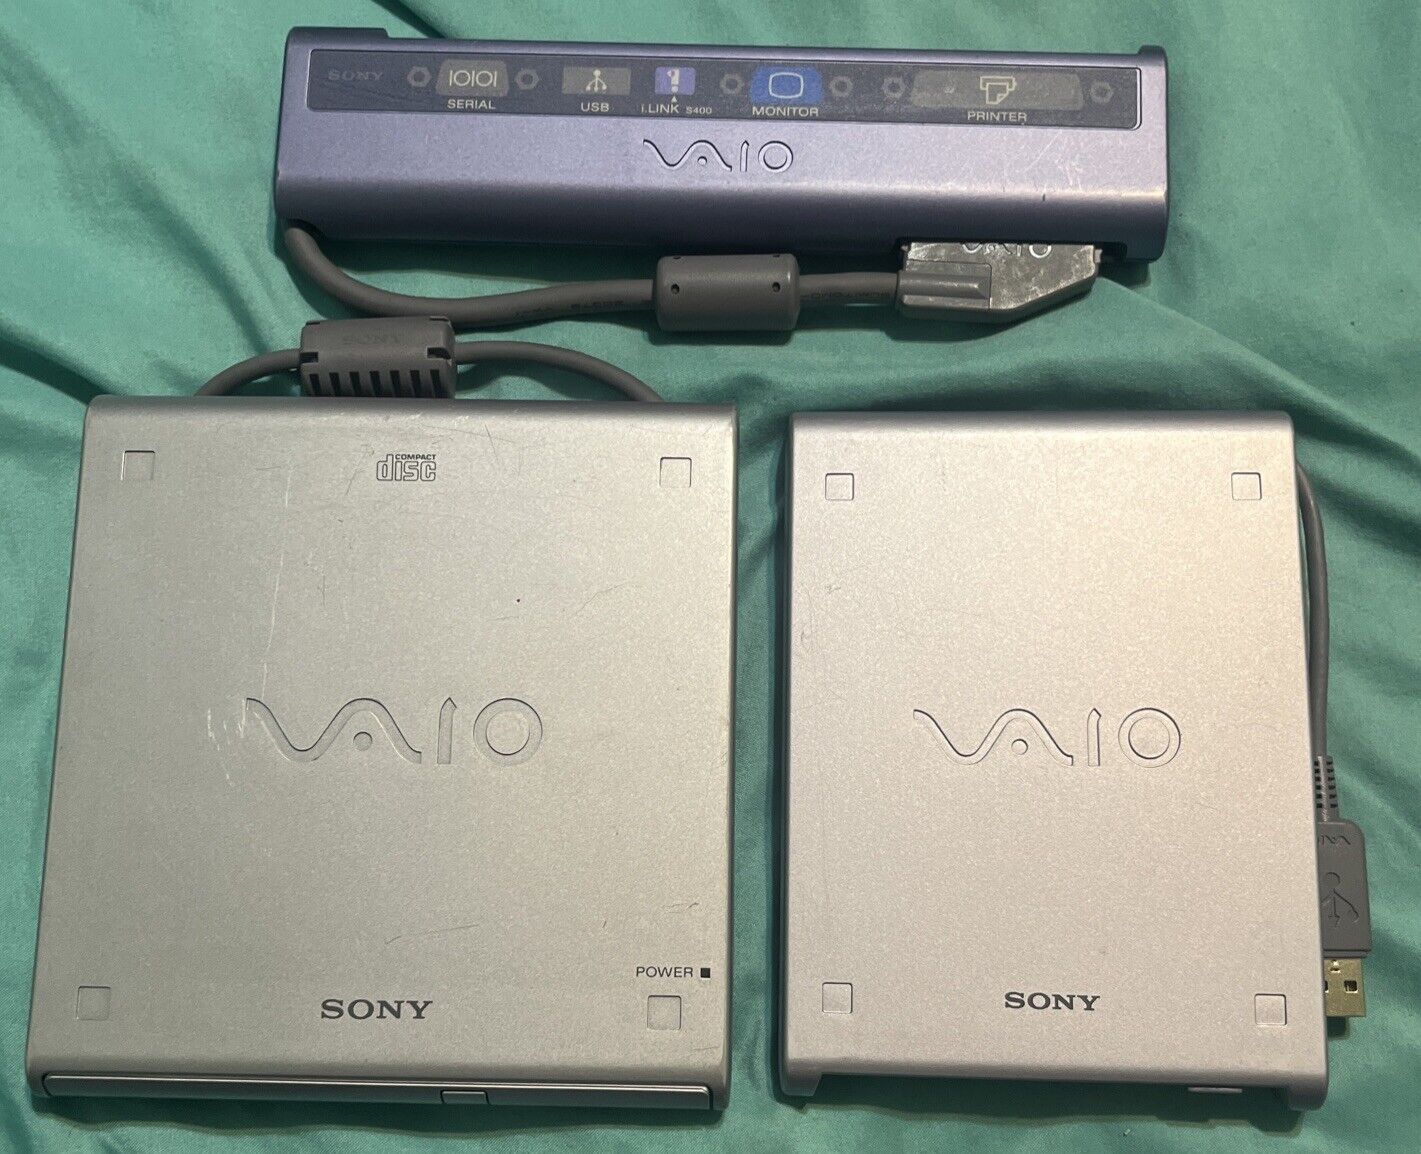 Sony Vaio 3 Piece Accessories Lot CD-Rom Drive PCGA-CD51, 3.5 Drive PCGA-FD5 EUC